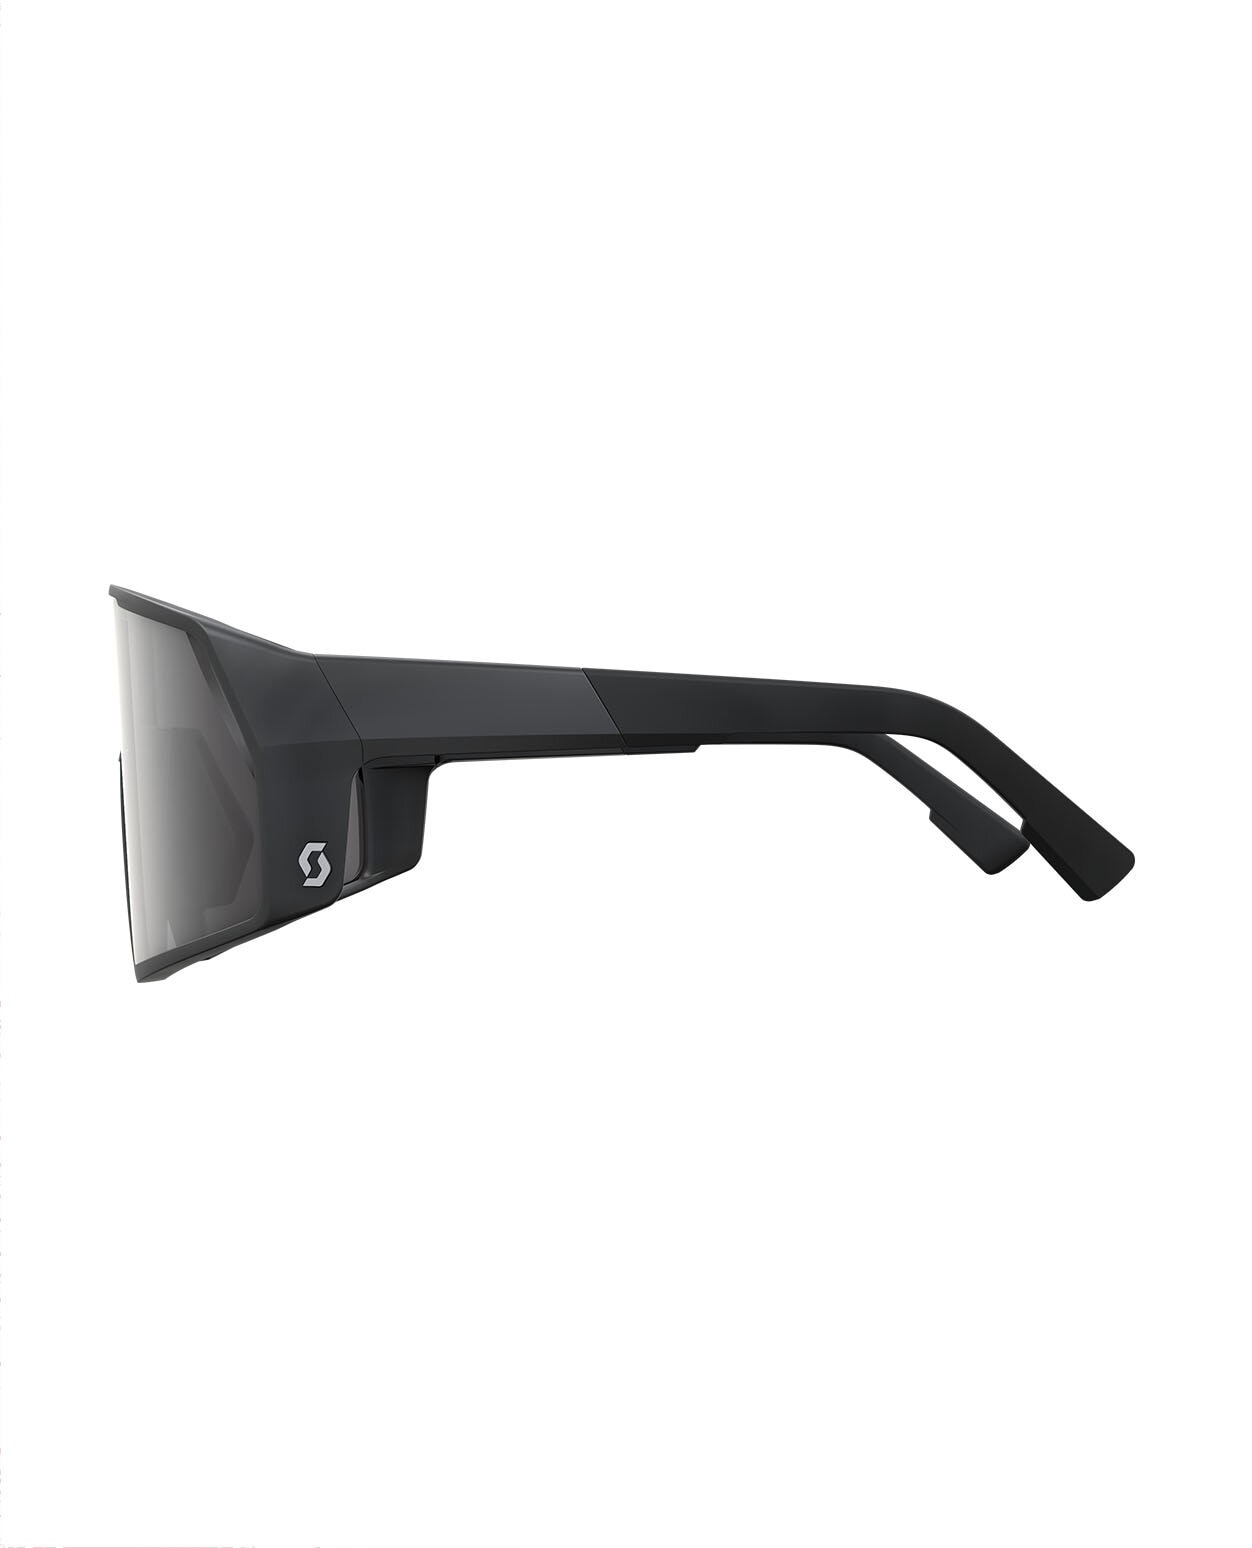 Scott Sunglasses Pro Shield LS Black Grey/Light Sensitive